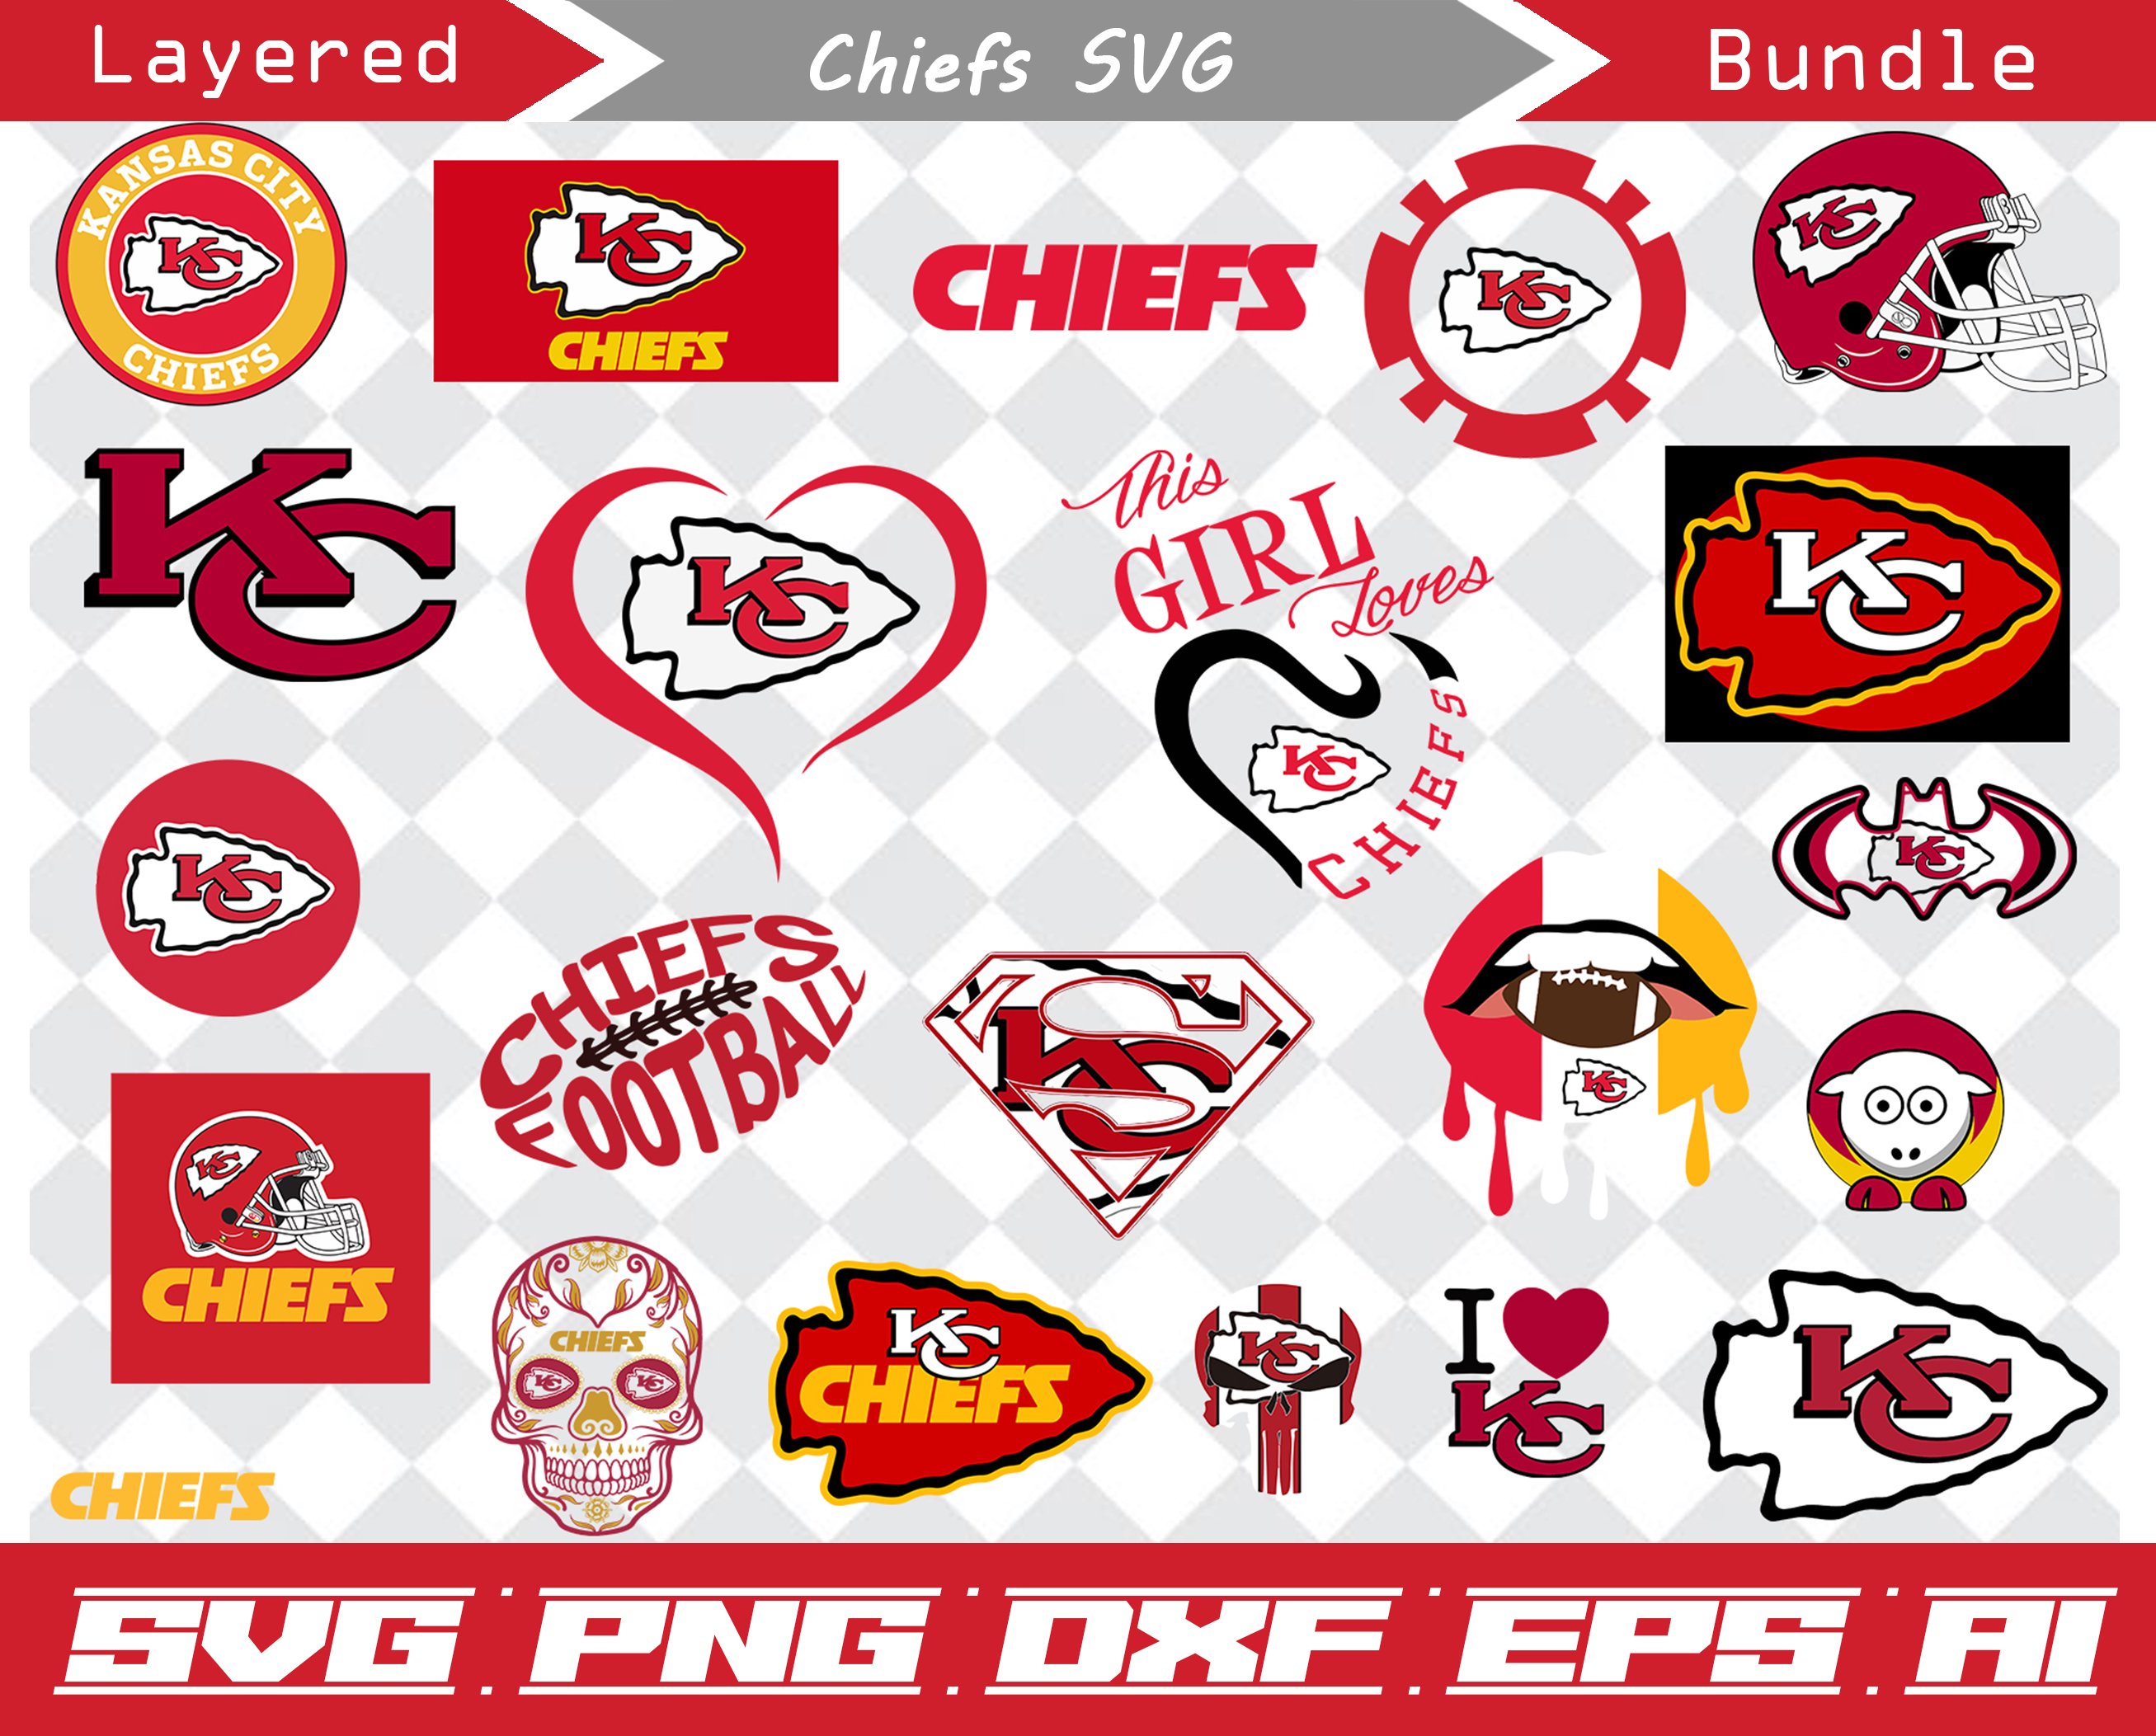 Kansas city Chiefs SVG, PNG, DXF, EPS, AI, Chiefs SVG, Kansas city